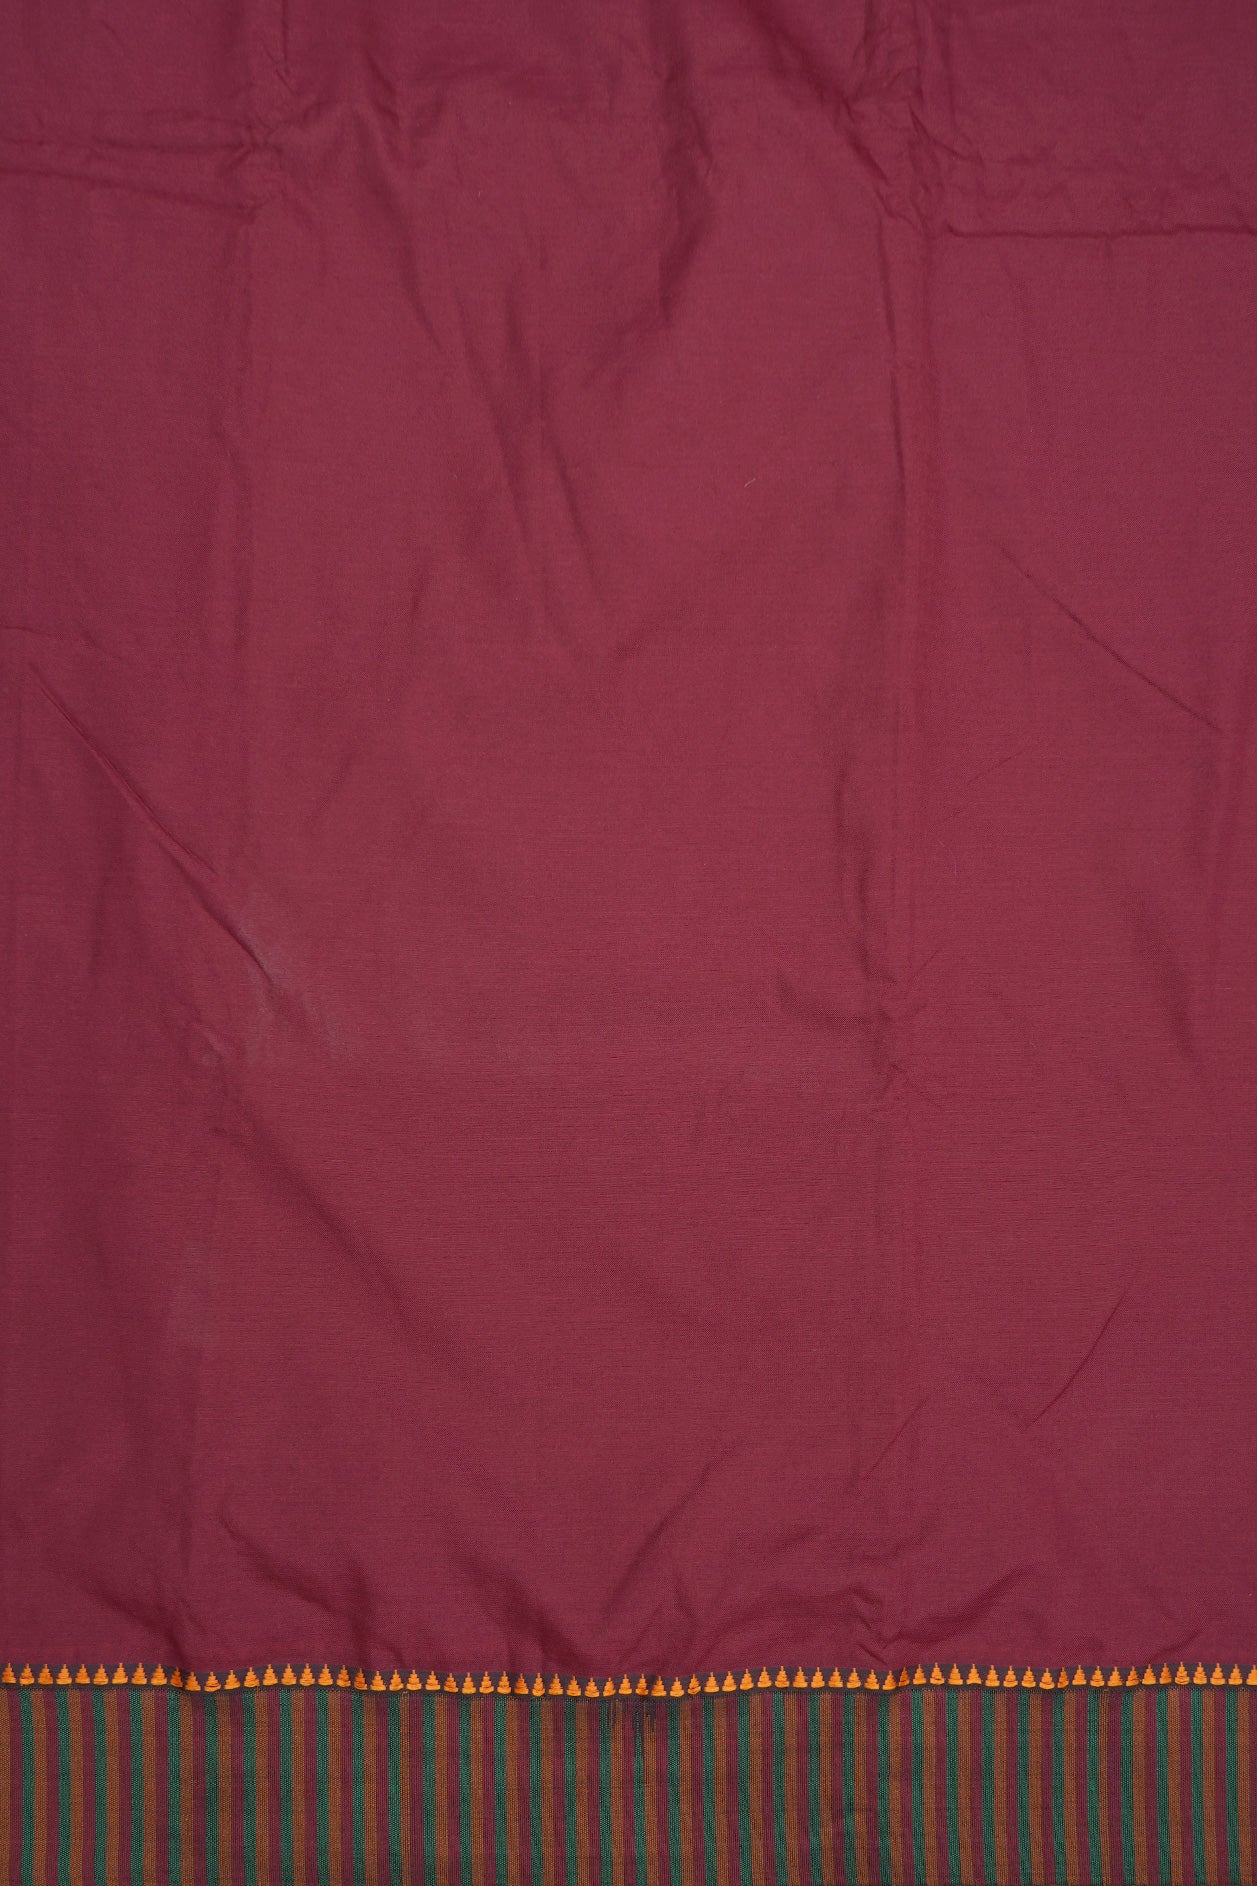 Multicolor Stripe Border Plain Rust Red Dharwad Cotton Saree